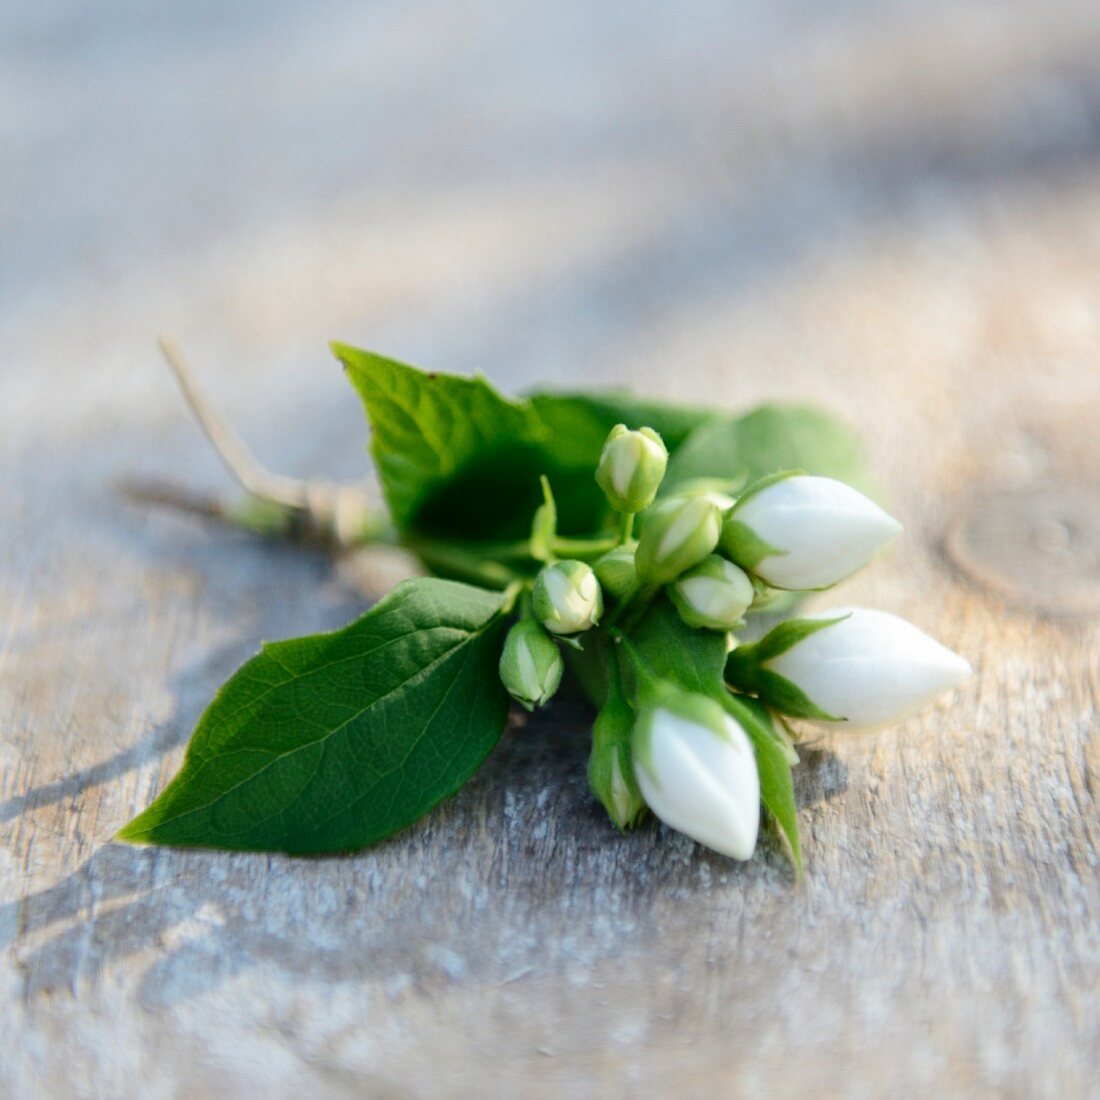 White jasmine flowers on wooden table